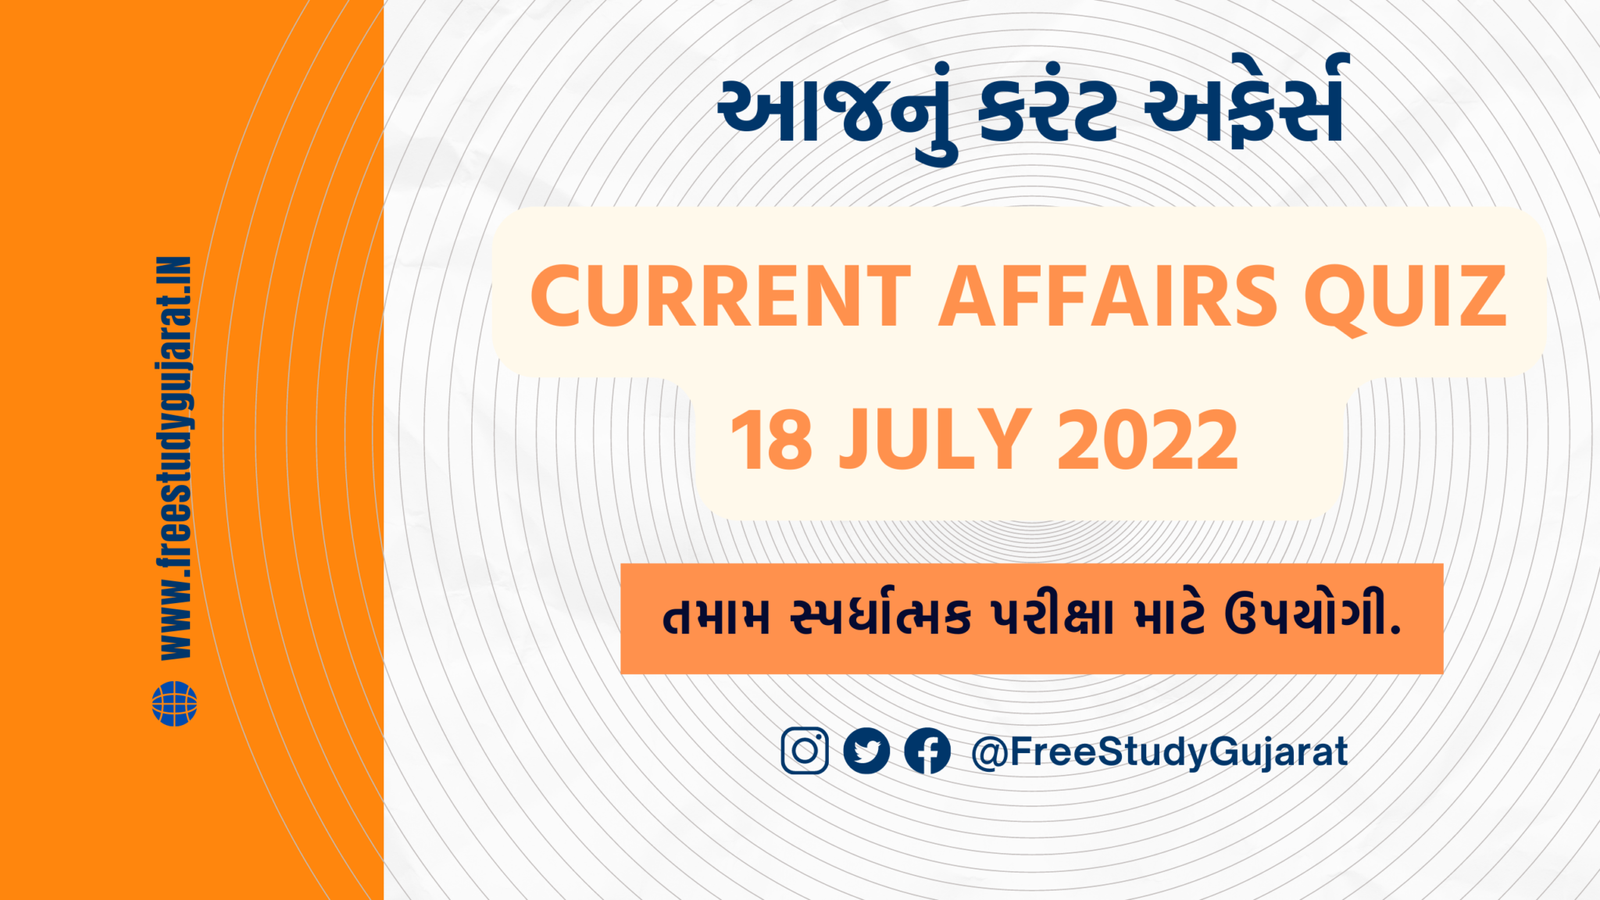 18 JULY 2022 CURRENT AFFAIRS IN GUJARATI | કરંટ અફેર્સ ગુજરાતીમાં